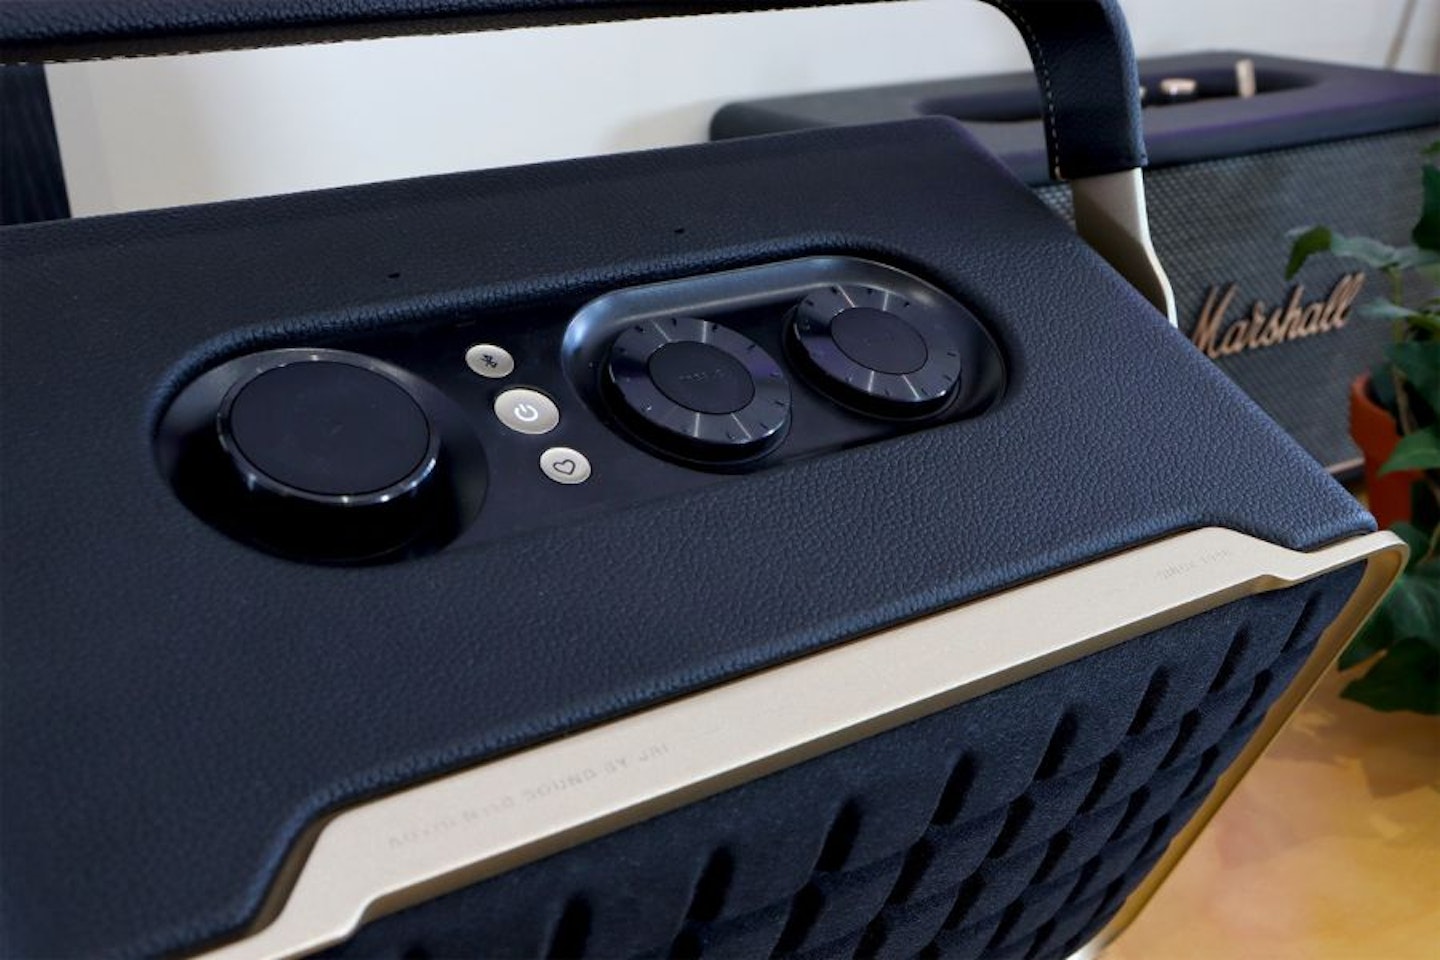 JBL Authentics 300 smart home speaker top panel and controls